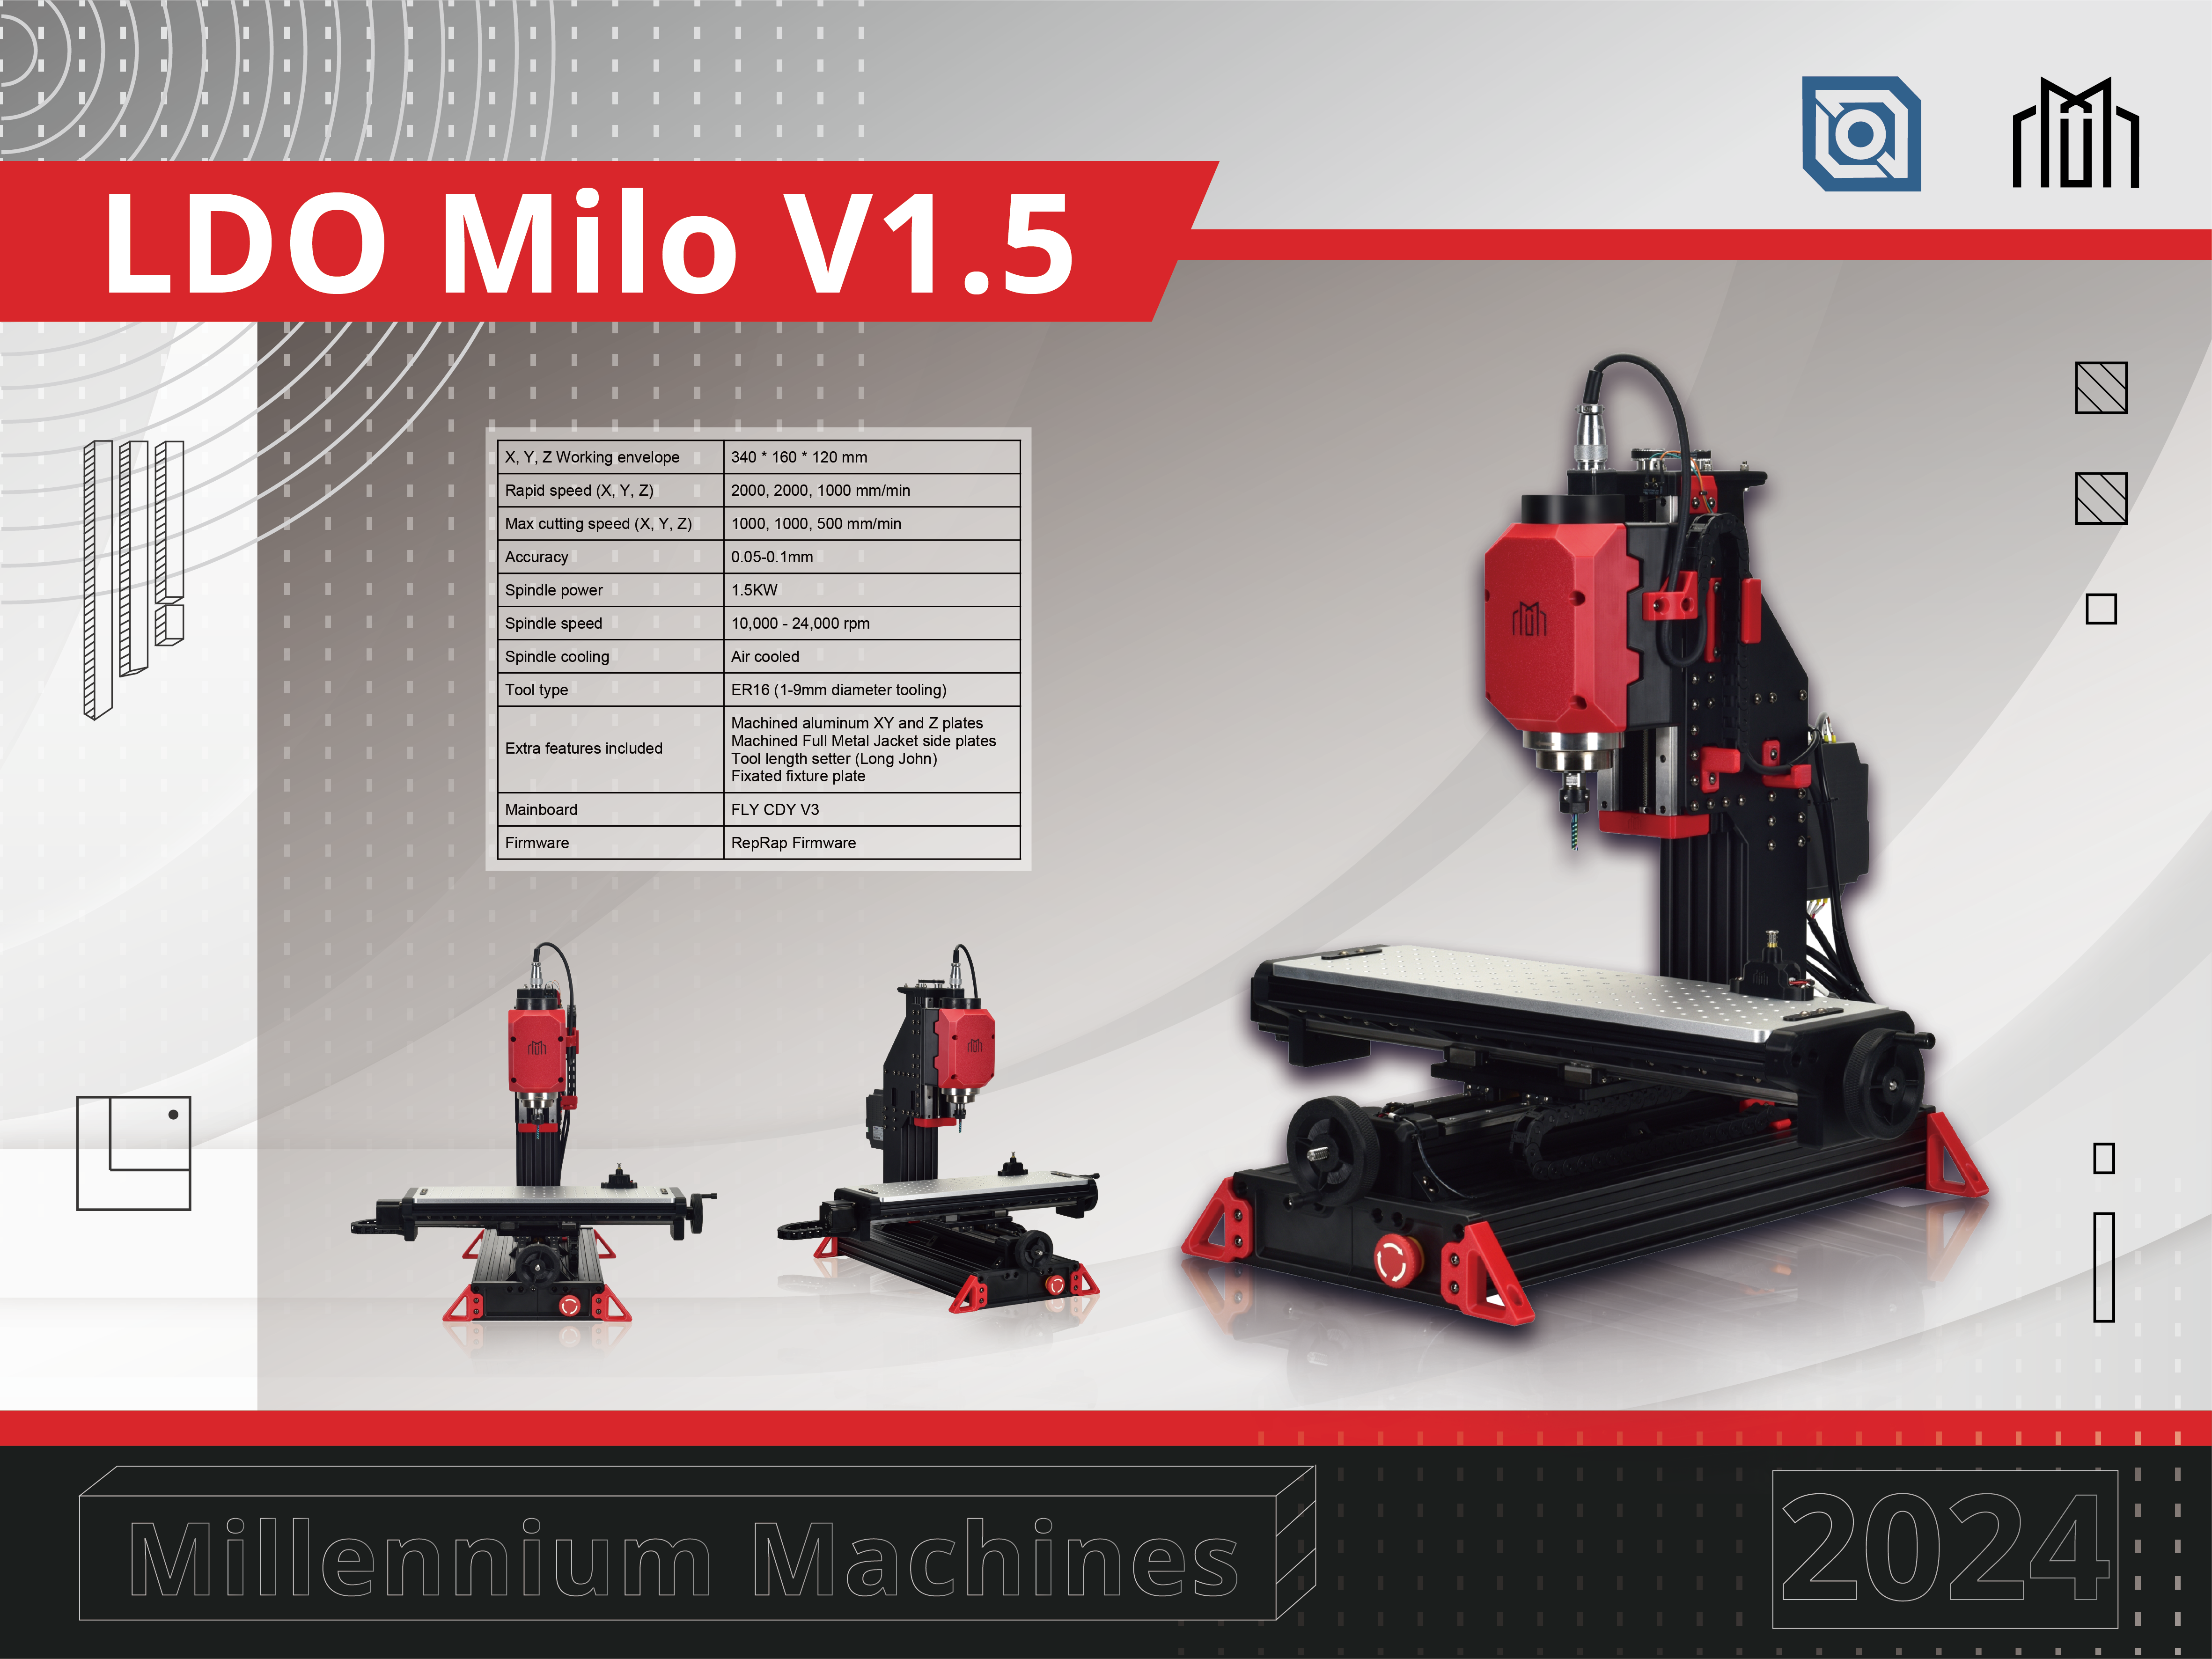 Milennium Machines Milo V1.5 Kit by LDO